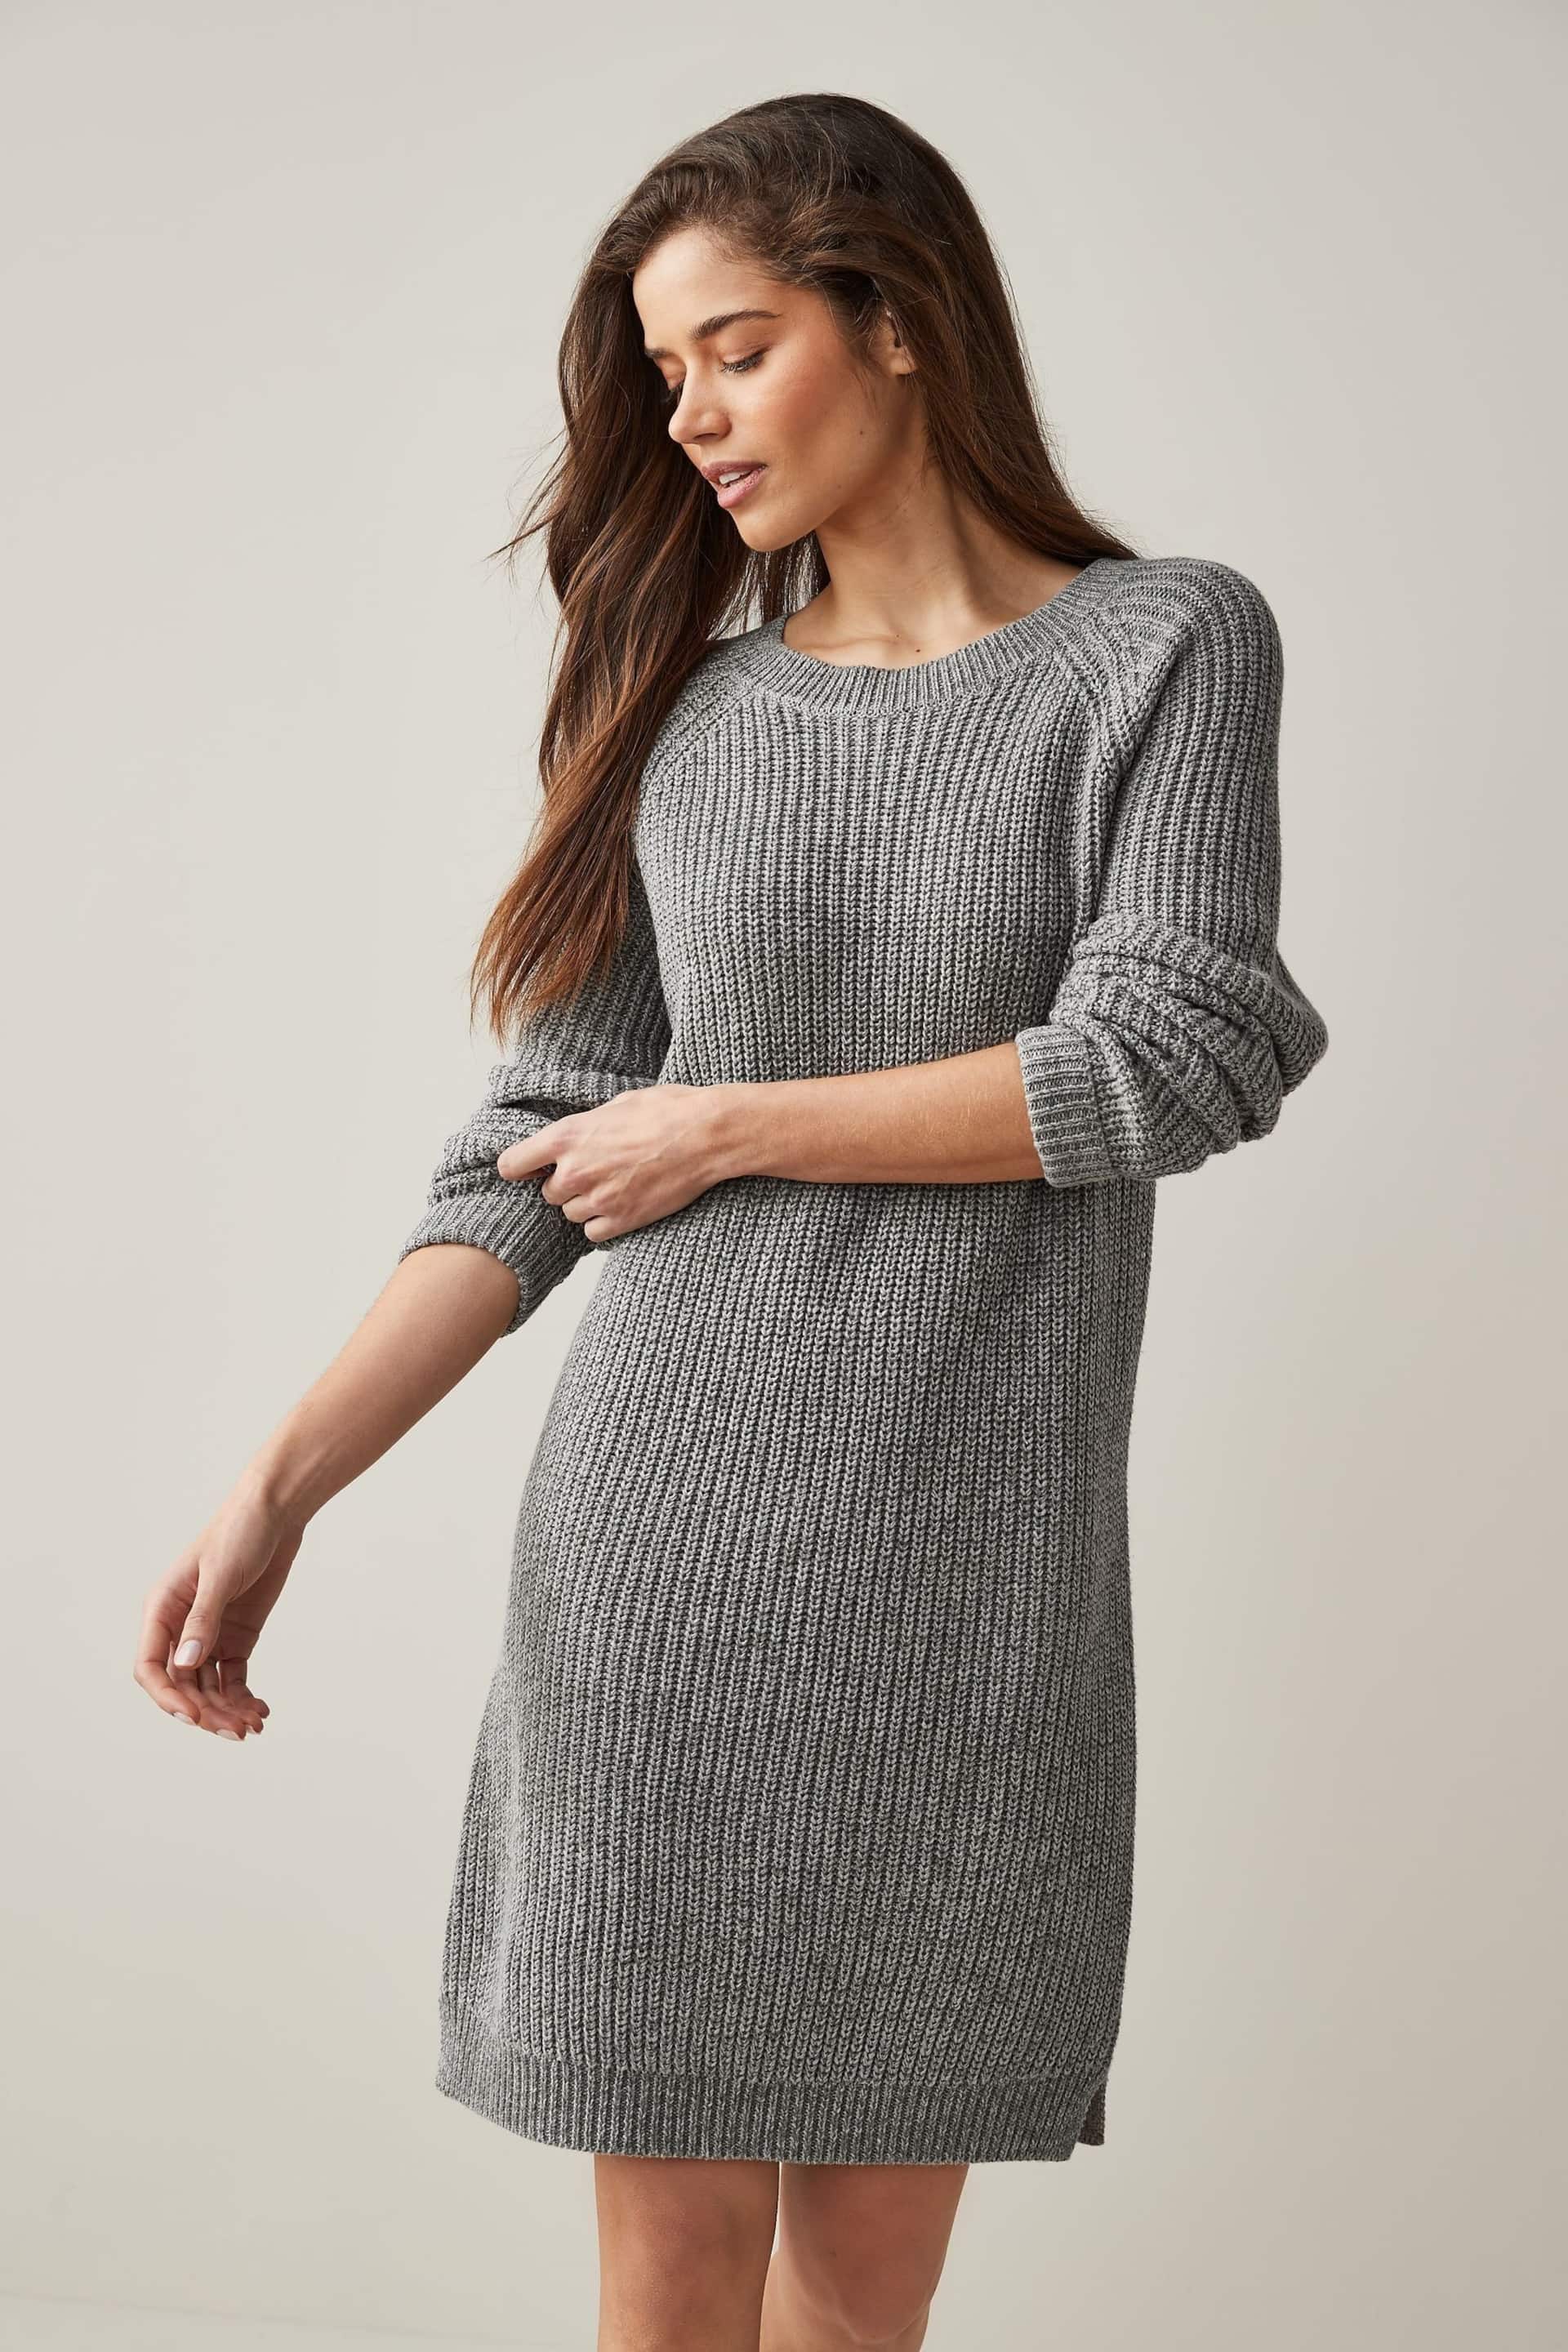 NOISY MAY Grey Long Sleeve Jumper Dress - Image 3 of 5